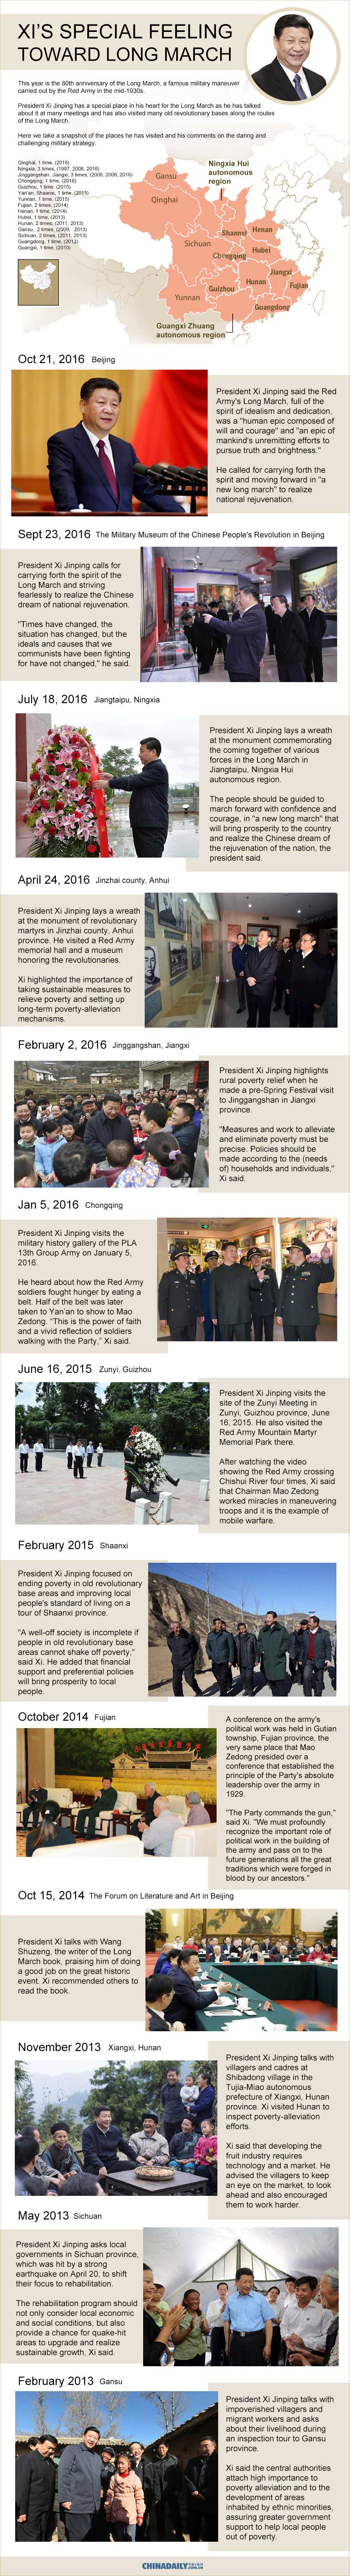 Xi's special feeling toward Long March